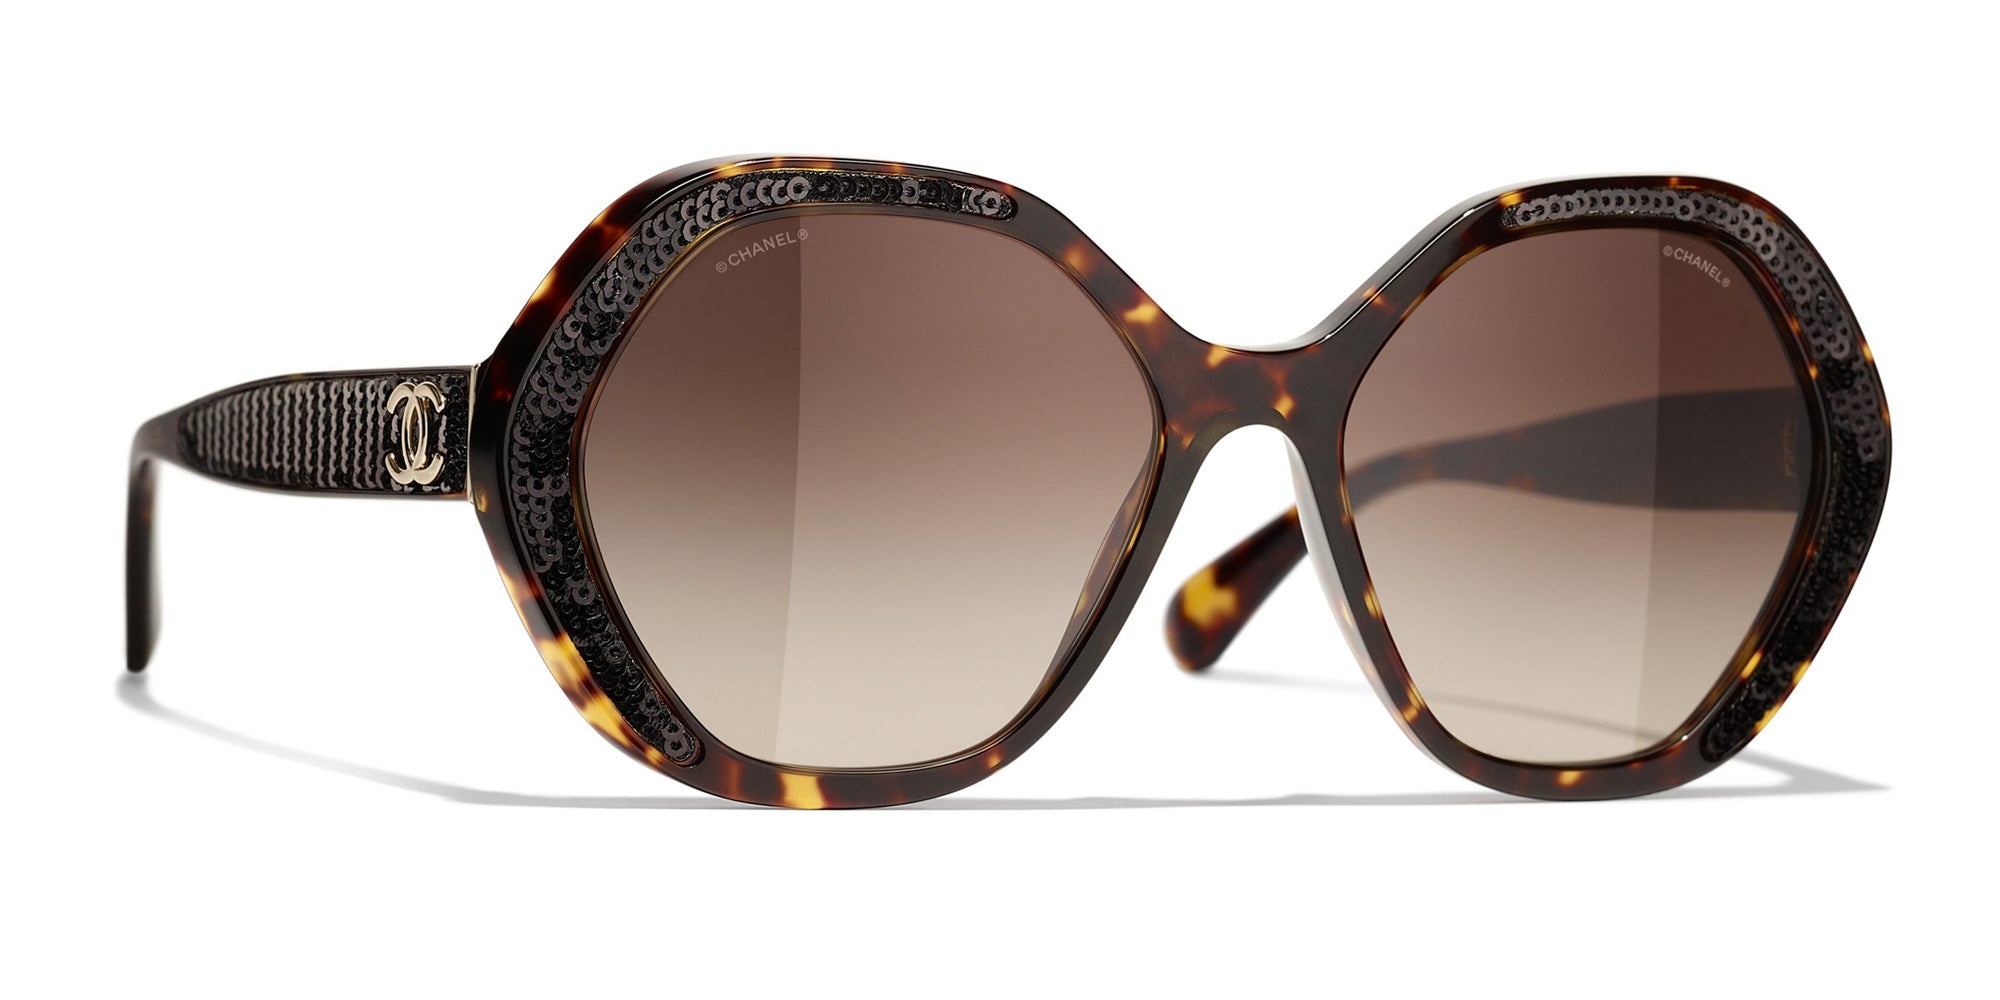 Chanel Round Sunglasses - Acetate, Dark Blue and Gold - Polarized - UV Protected - Women's Sunglasses - 5489 C503/S2